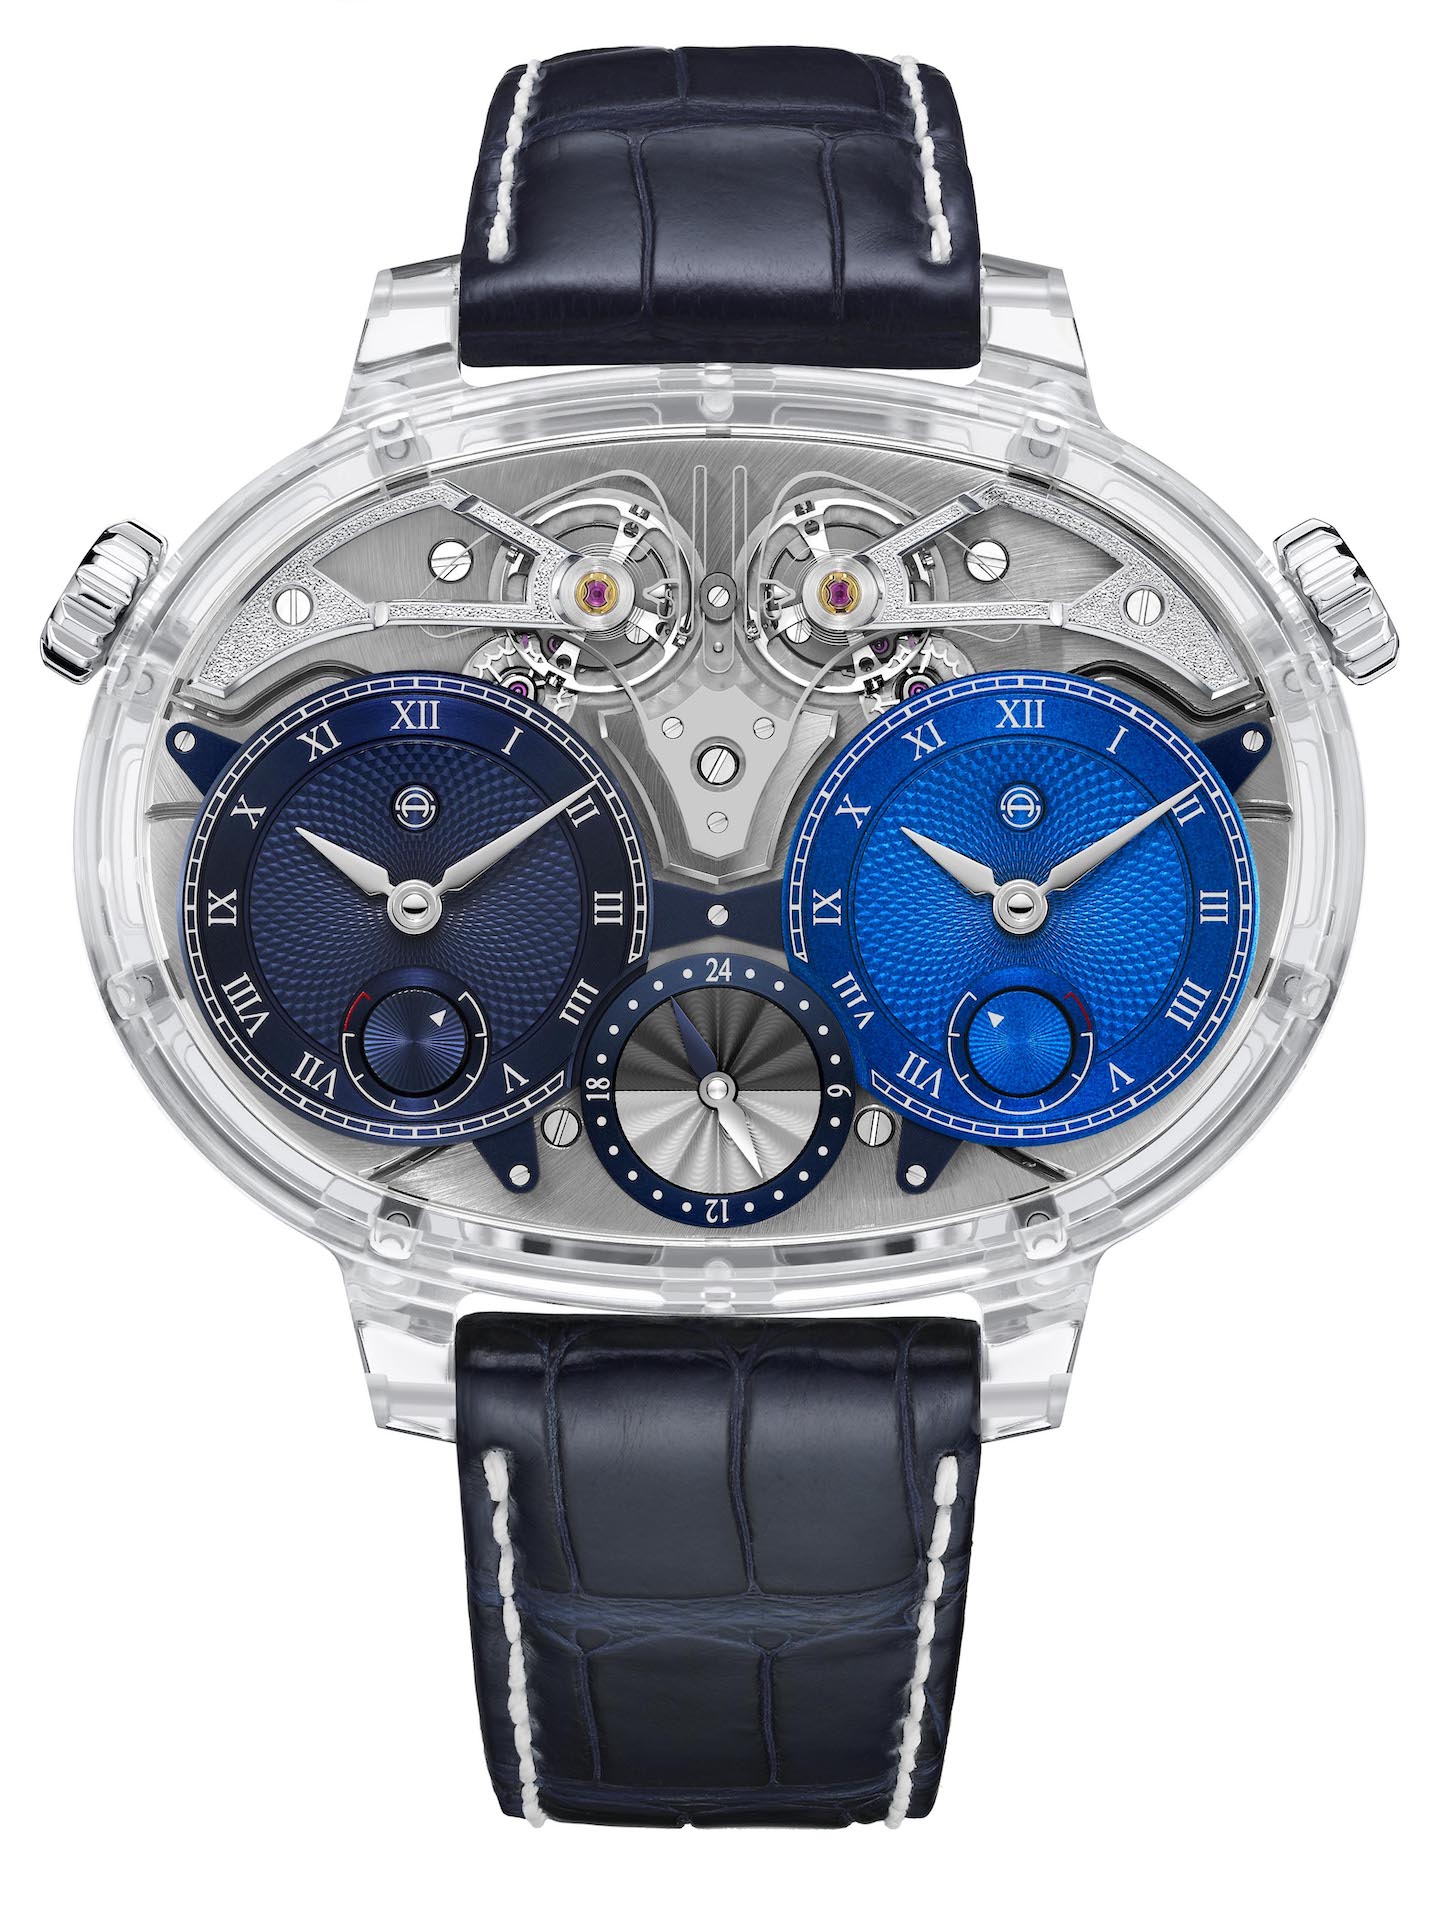 Armin Strom Masterpieces Dual Time Resonance Sapphire Watch, SIHH 2019